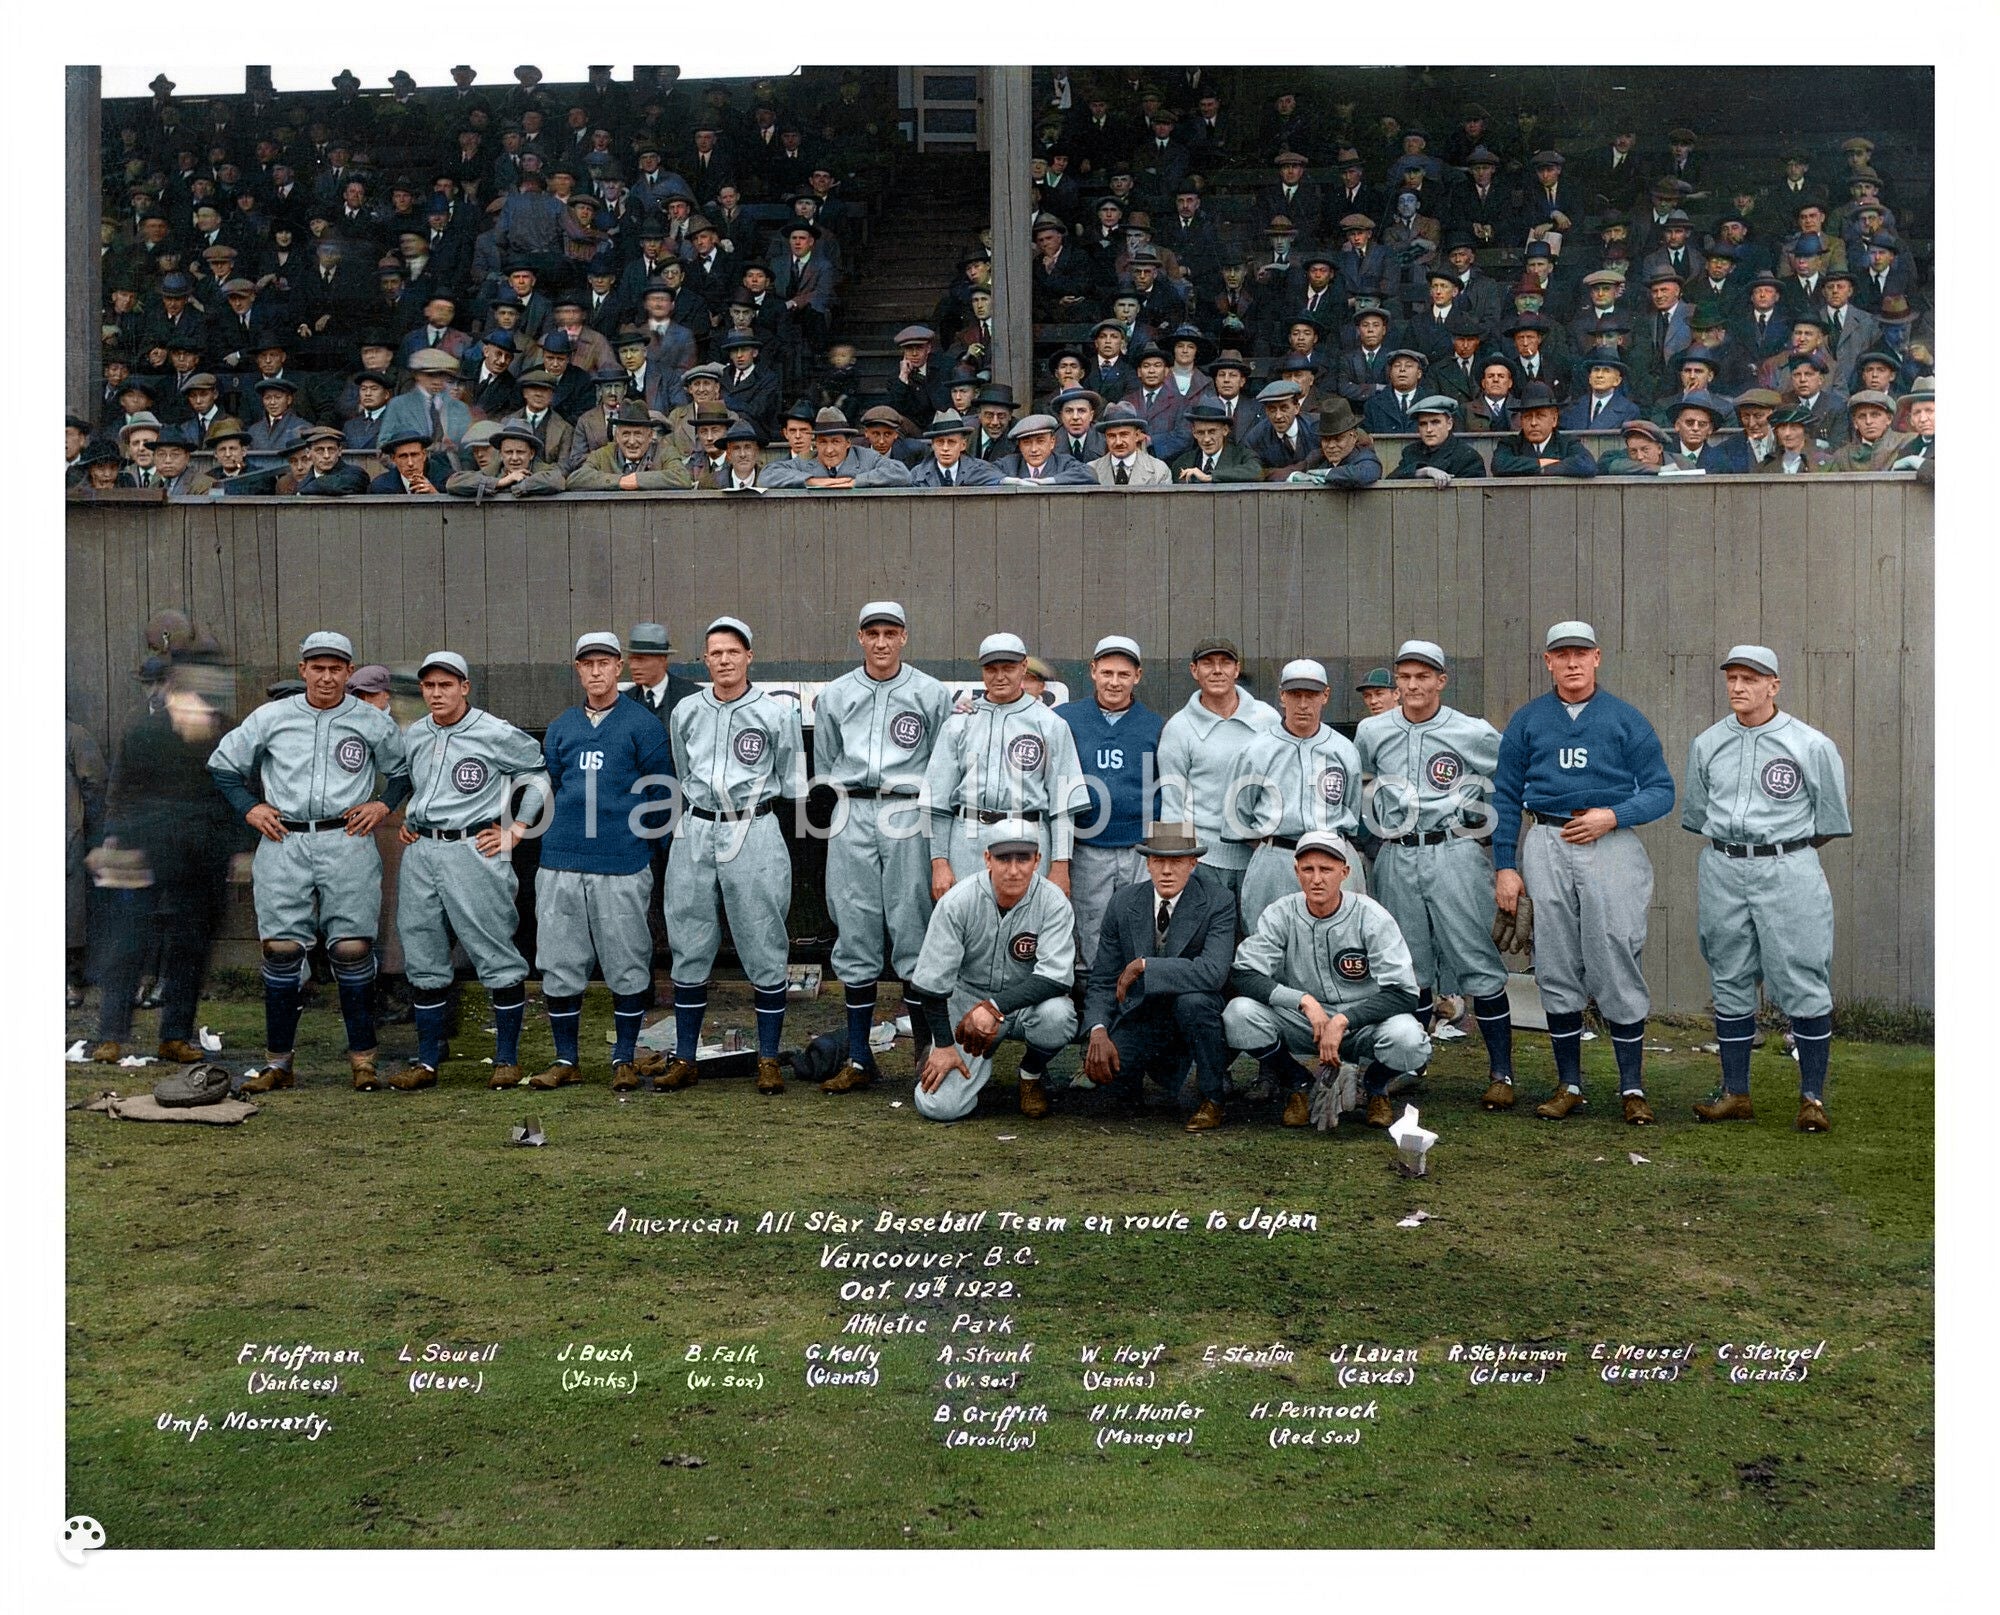 BOSTON RED SOX 1918 World Series Champions 8x10 TEAM PHOTO Babe Ruth